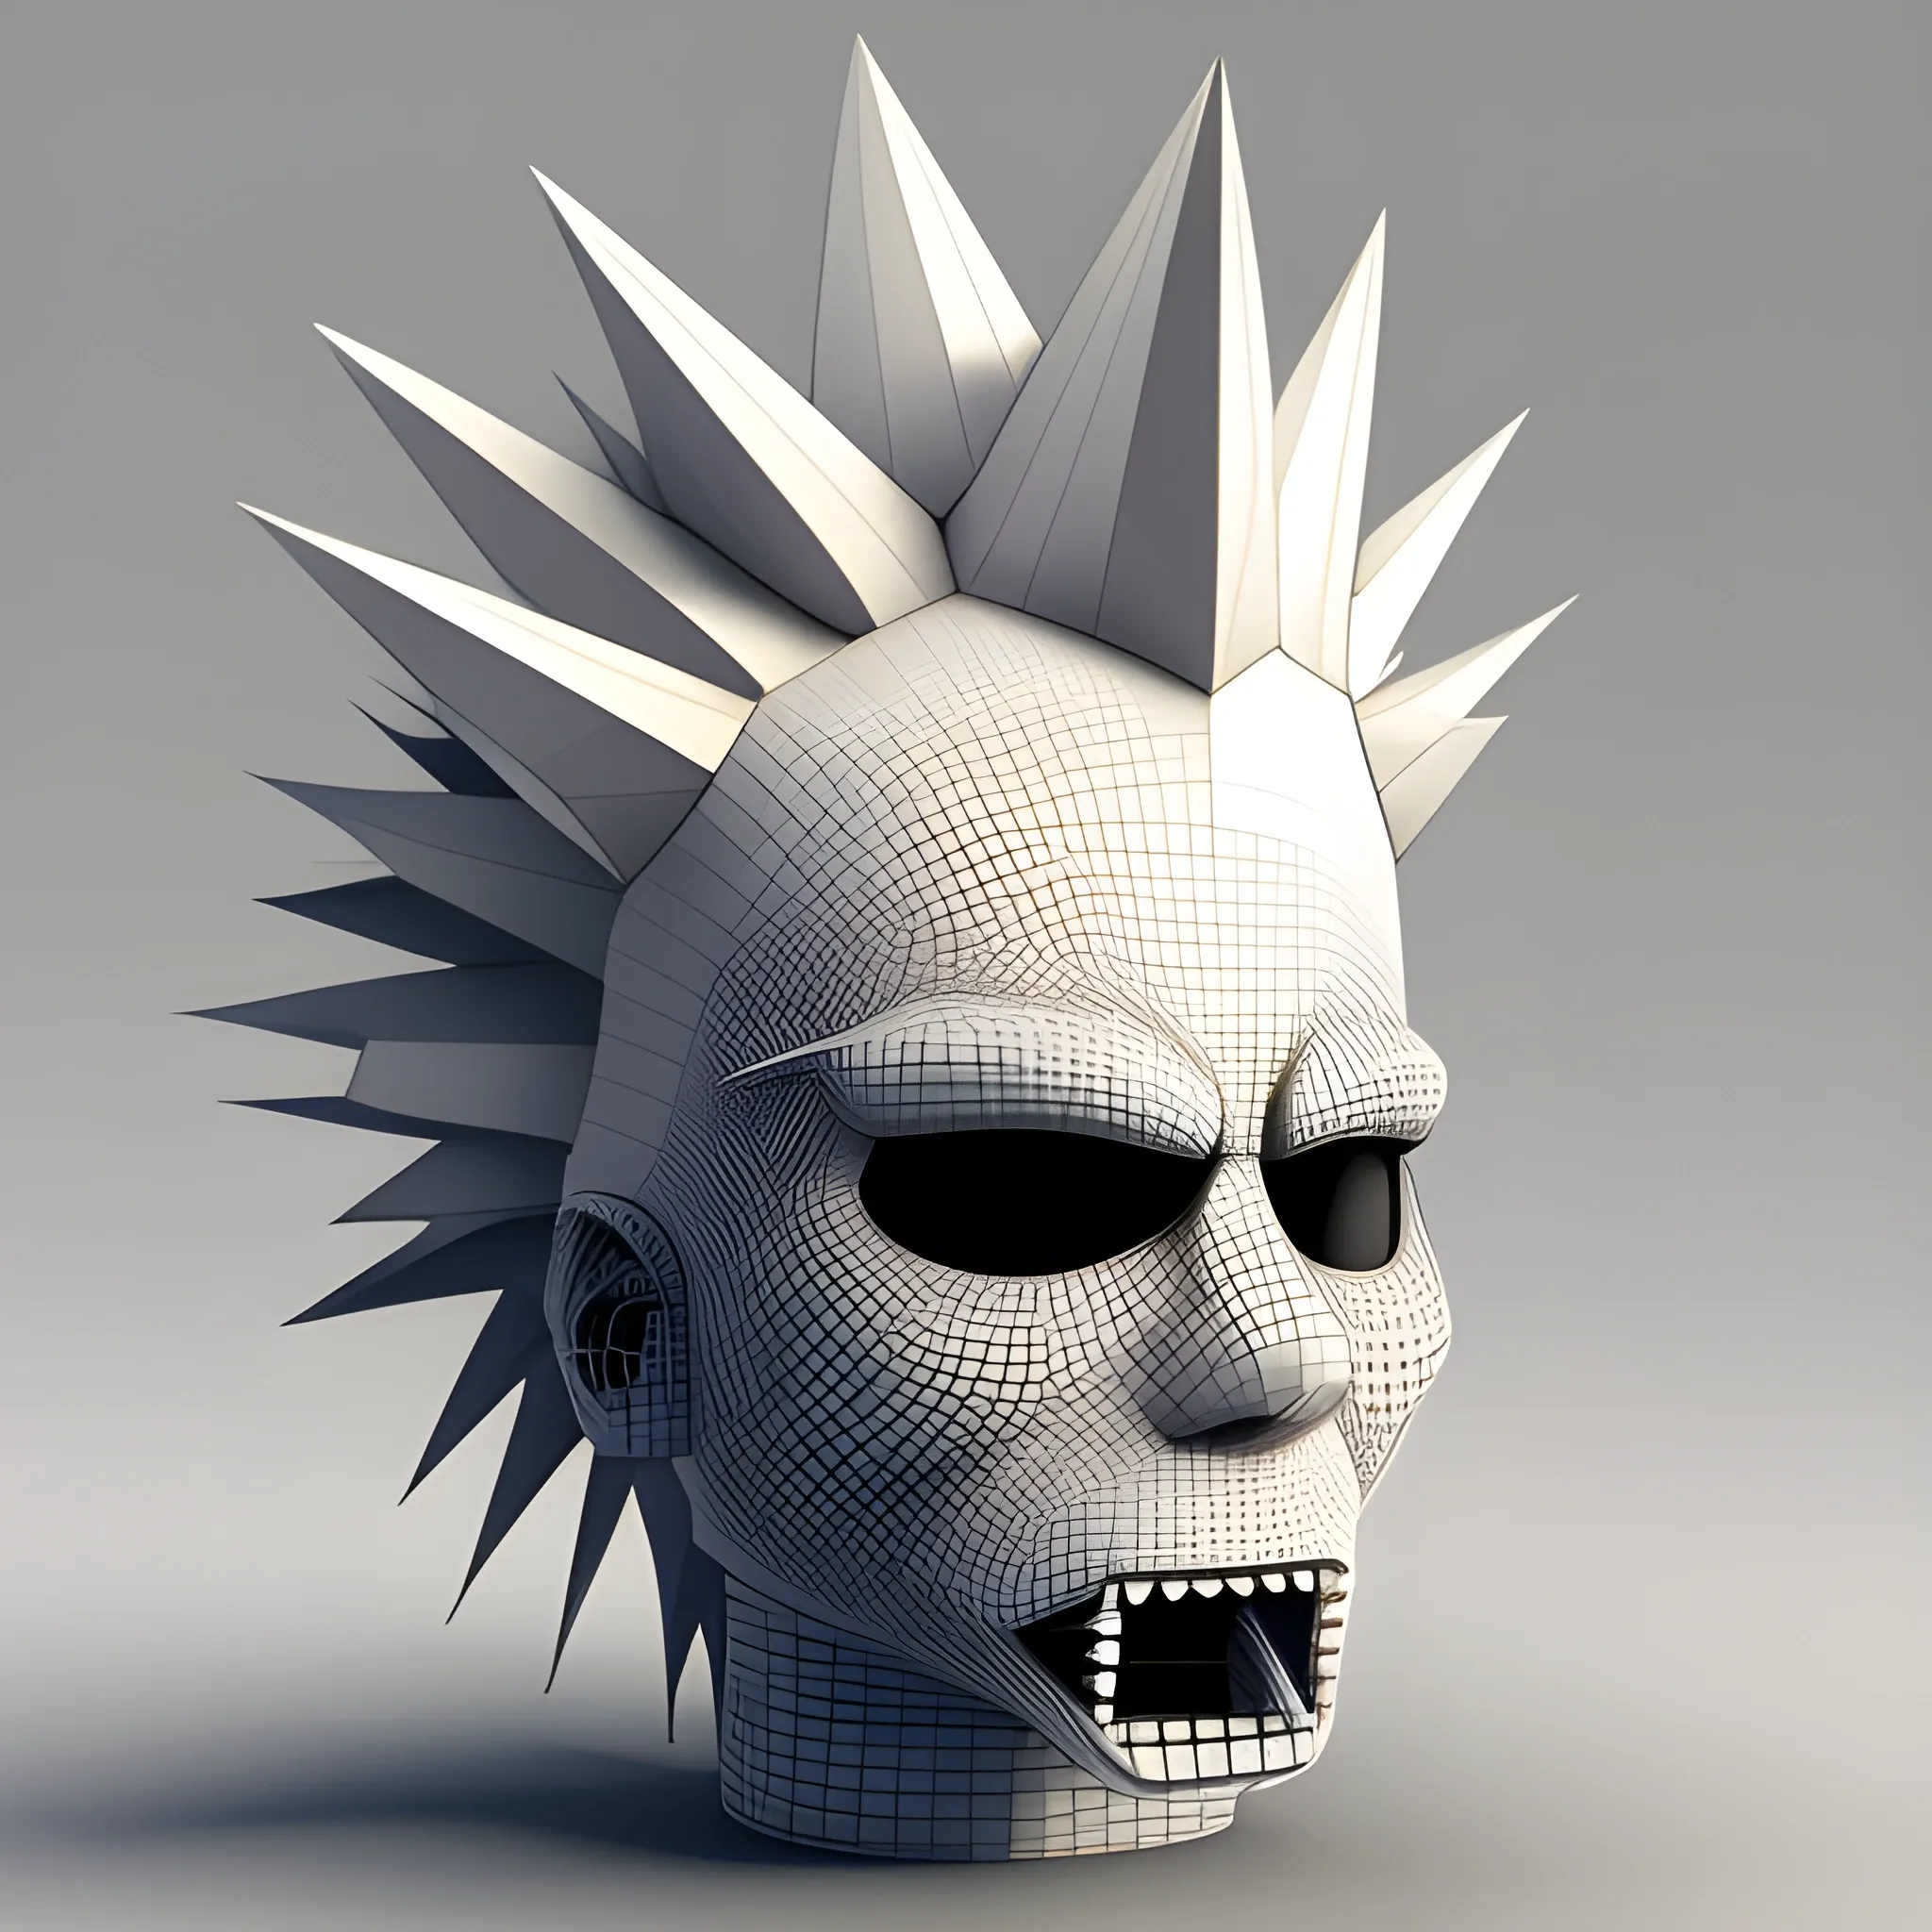 
3D Spiky Head Punk White Mascot